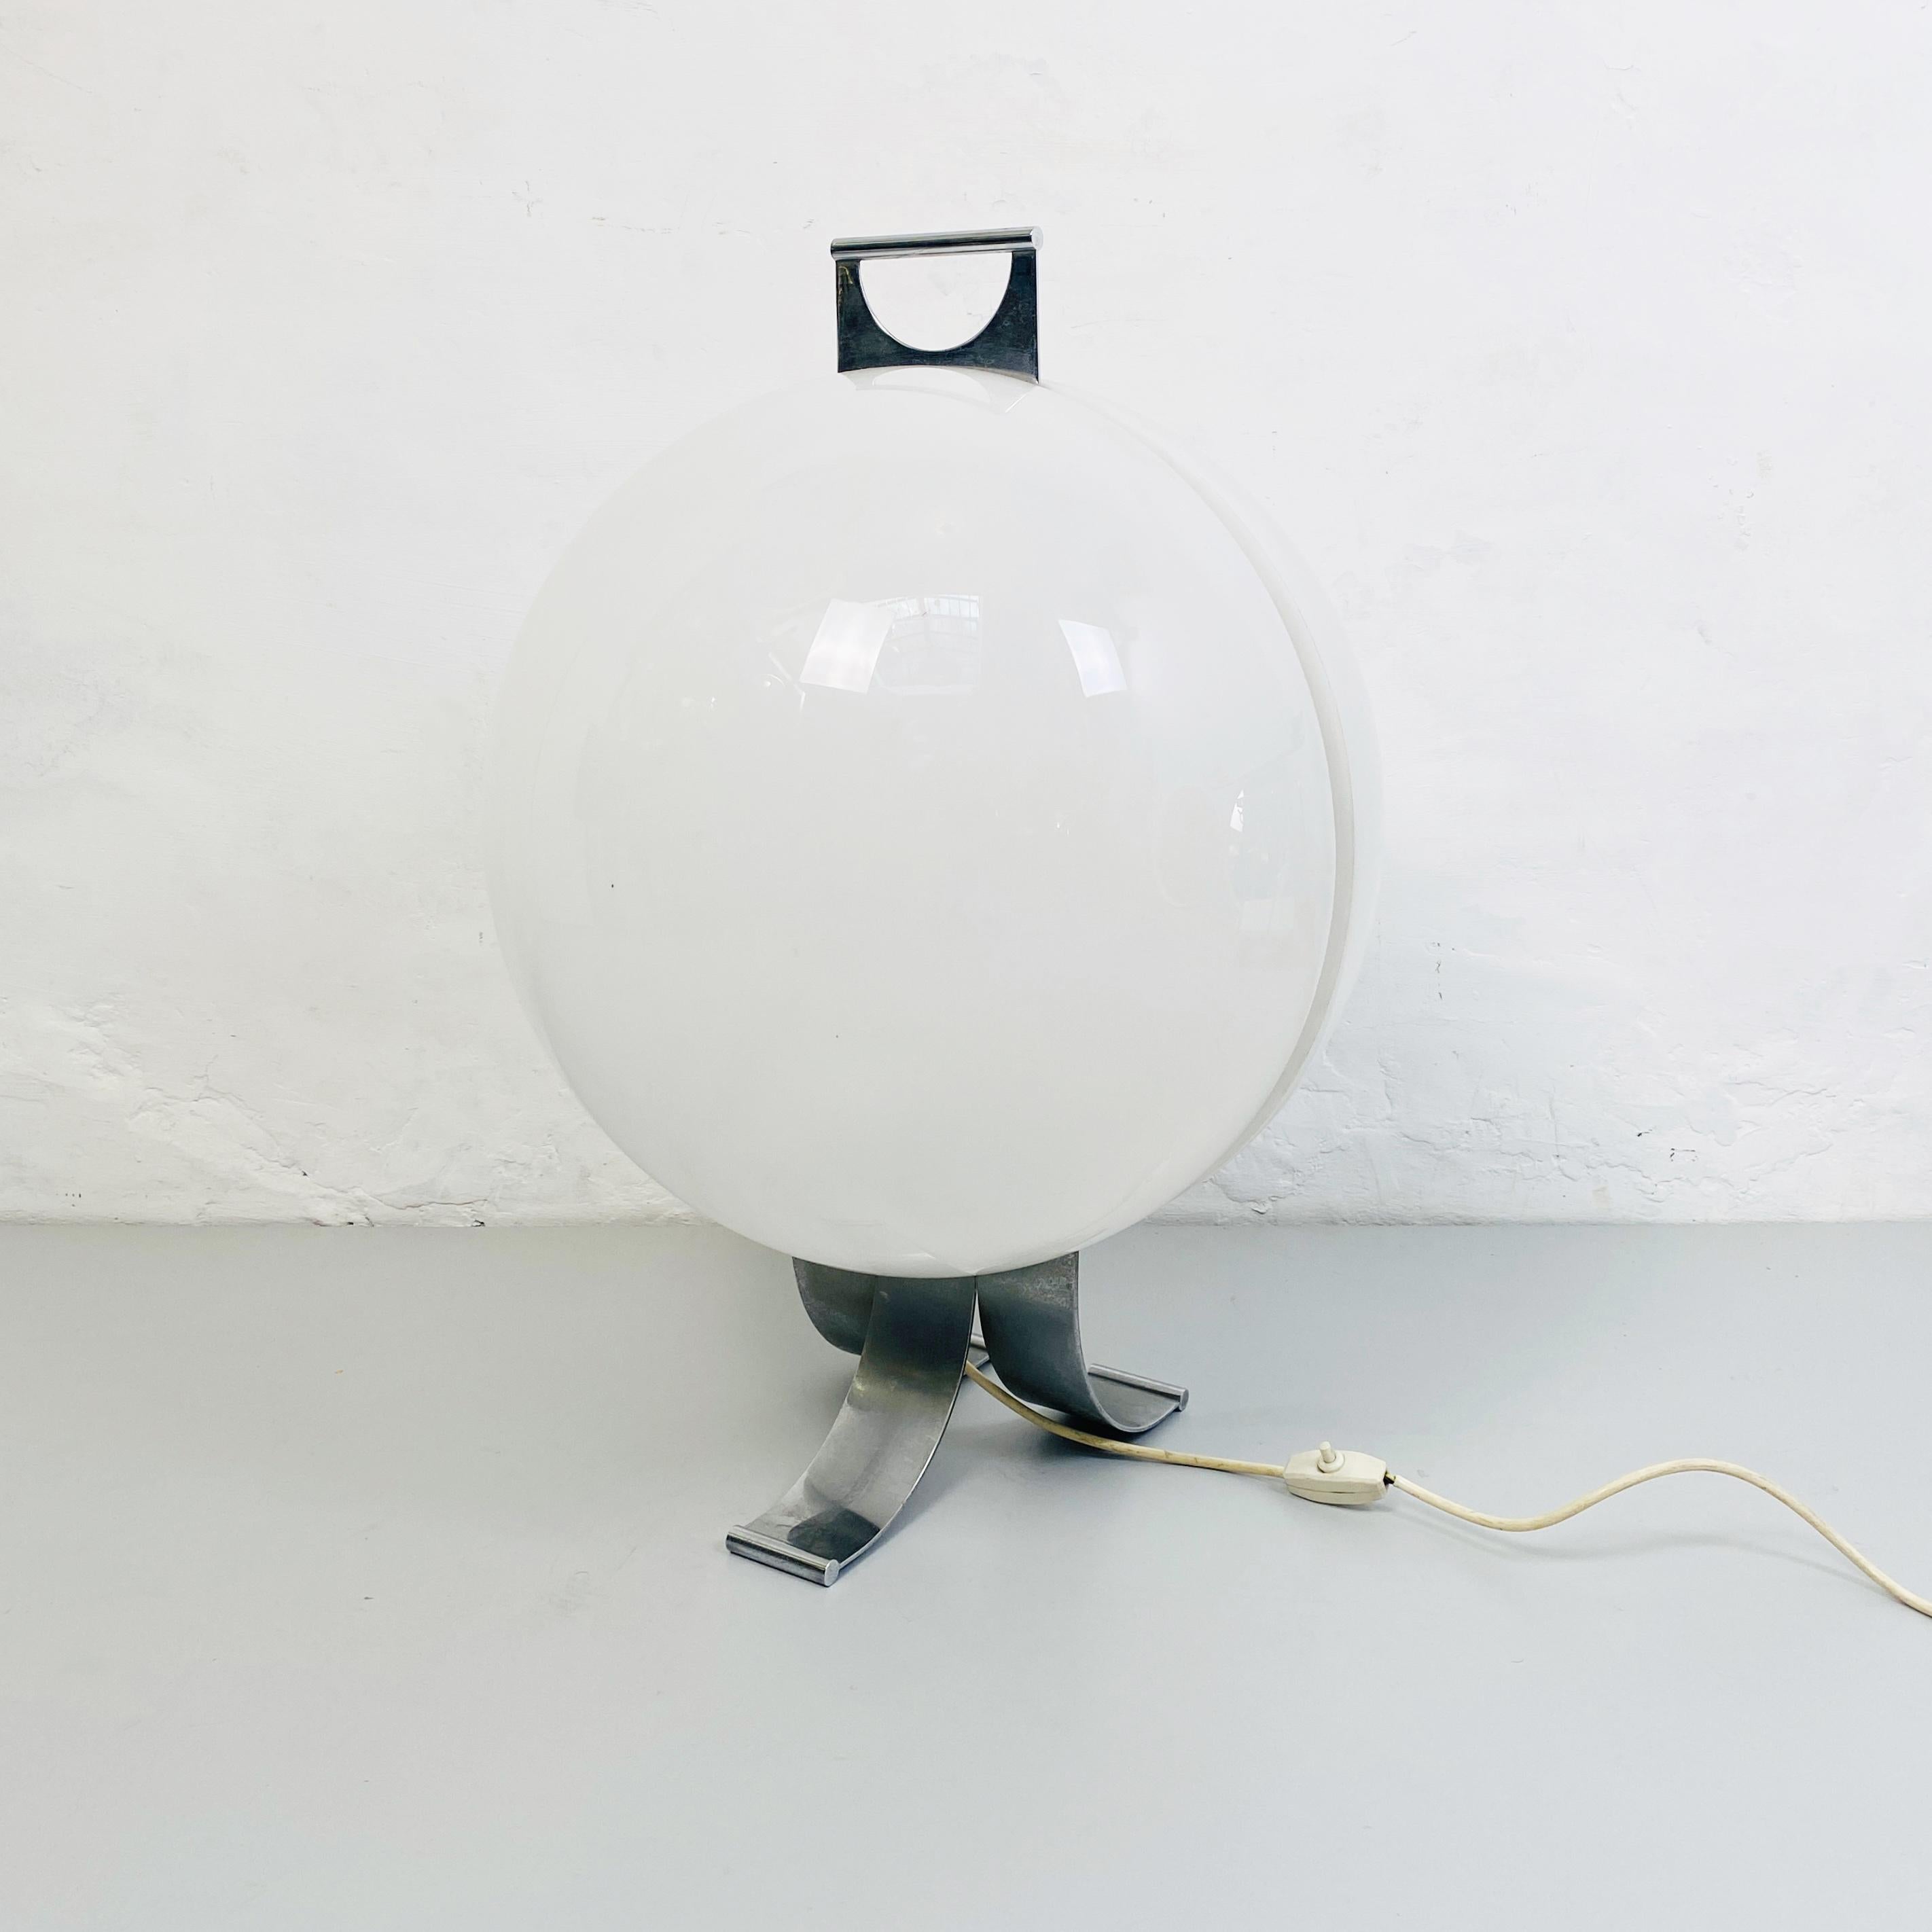 Italian Mid-Century Modern Sfera Table Lamp by Beni Cuccuru for Ecolight, 1972 In Good Condition For Sale In MIlano, IT